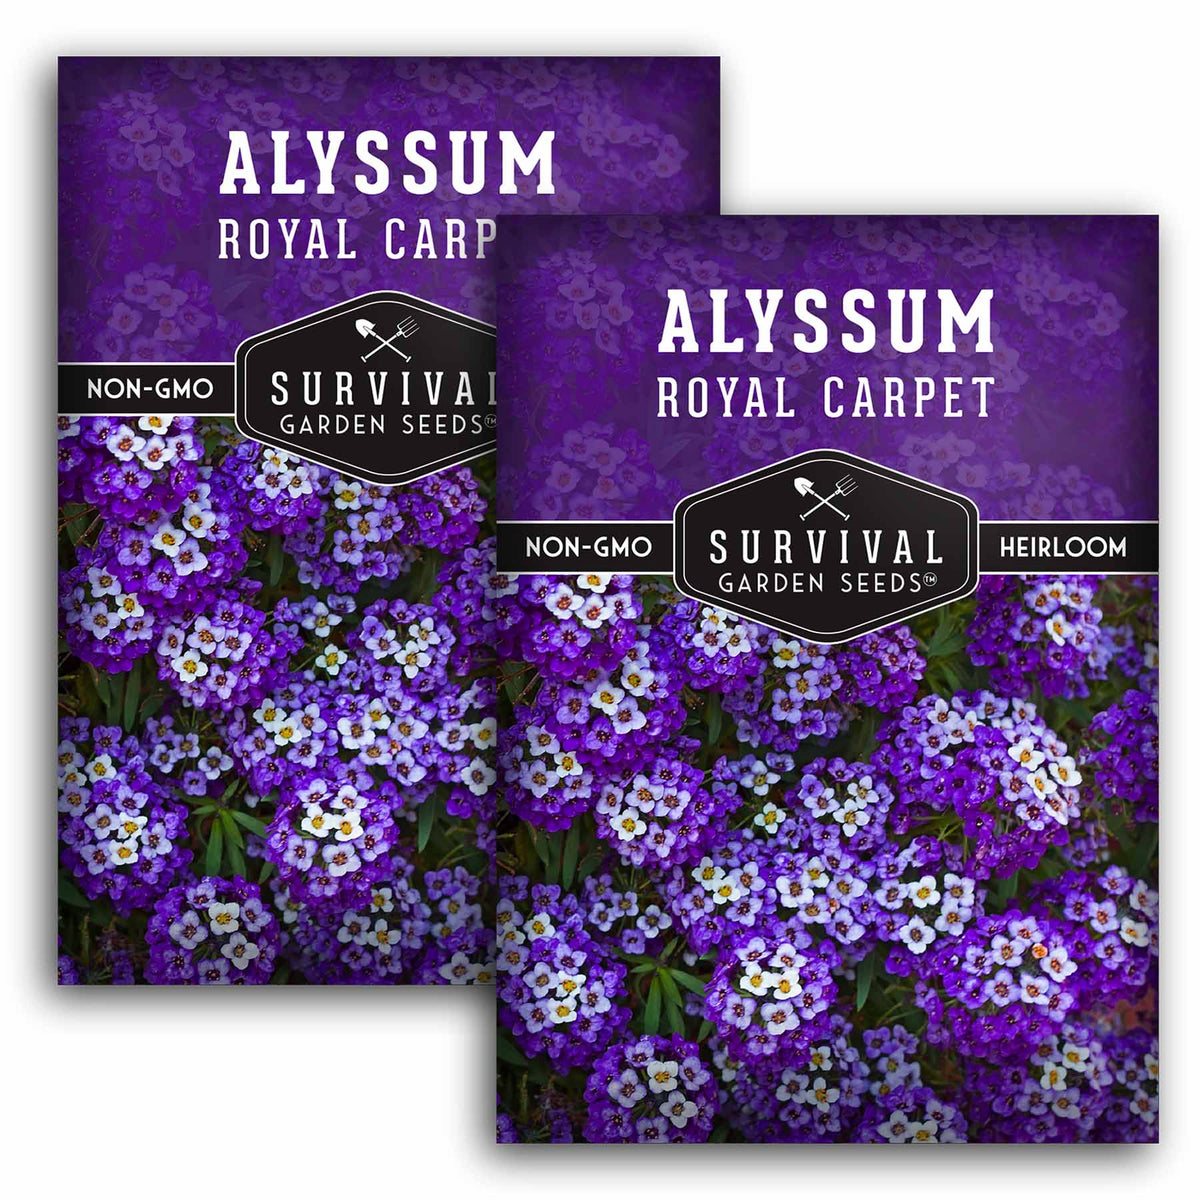 2 packets of Royal Carpet Alyssum seeds